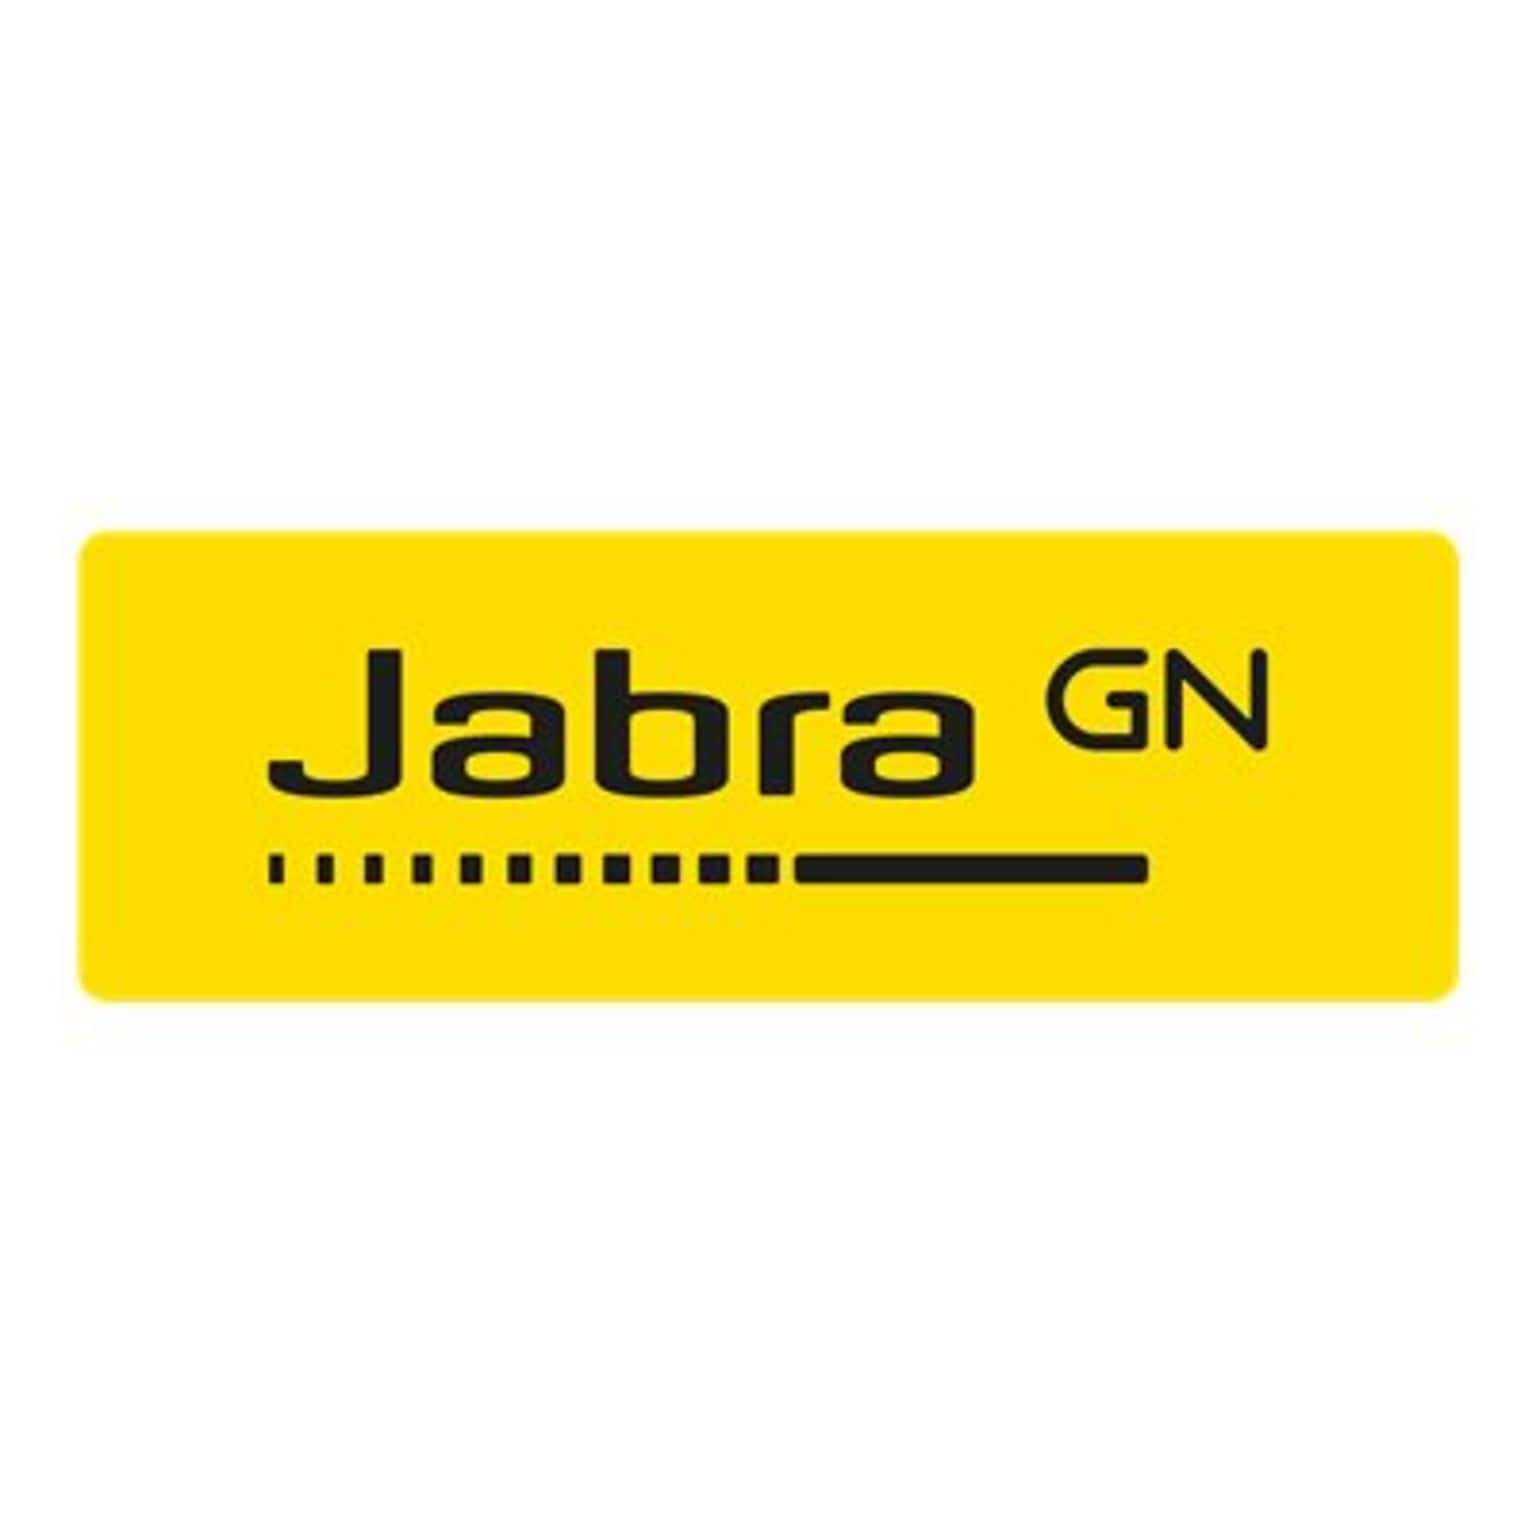 Jabra 4 USB A Male/C Male, Beige (14208-33)